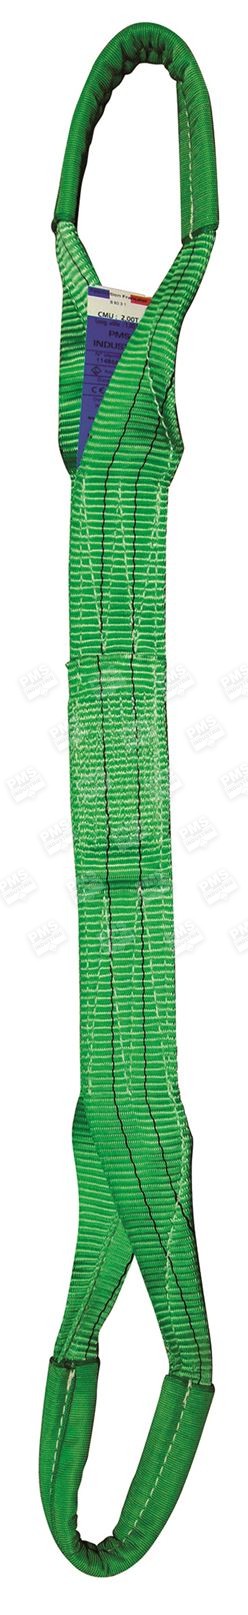 Sangle plate avec boucles polyester 2T/5m - BatiPlace